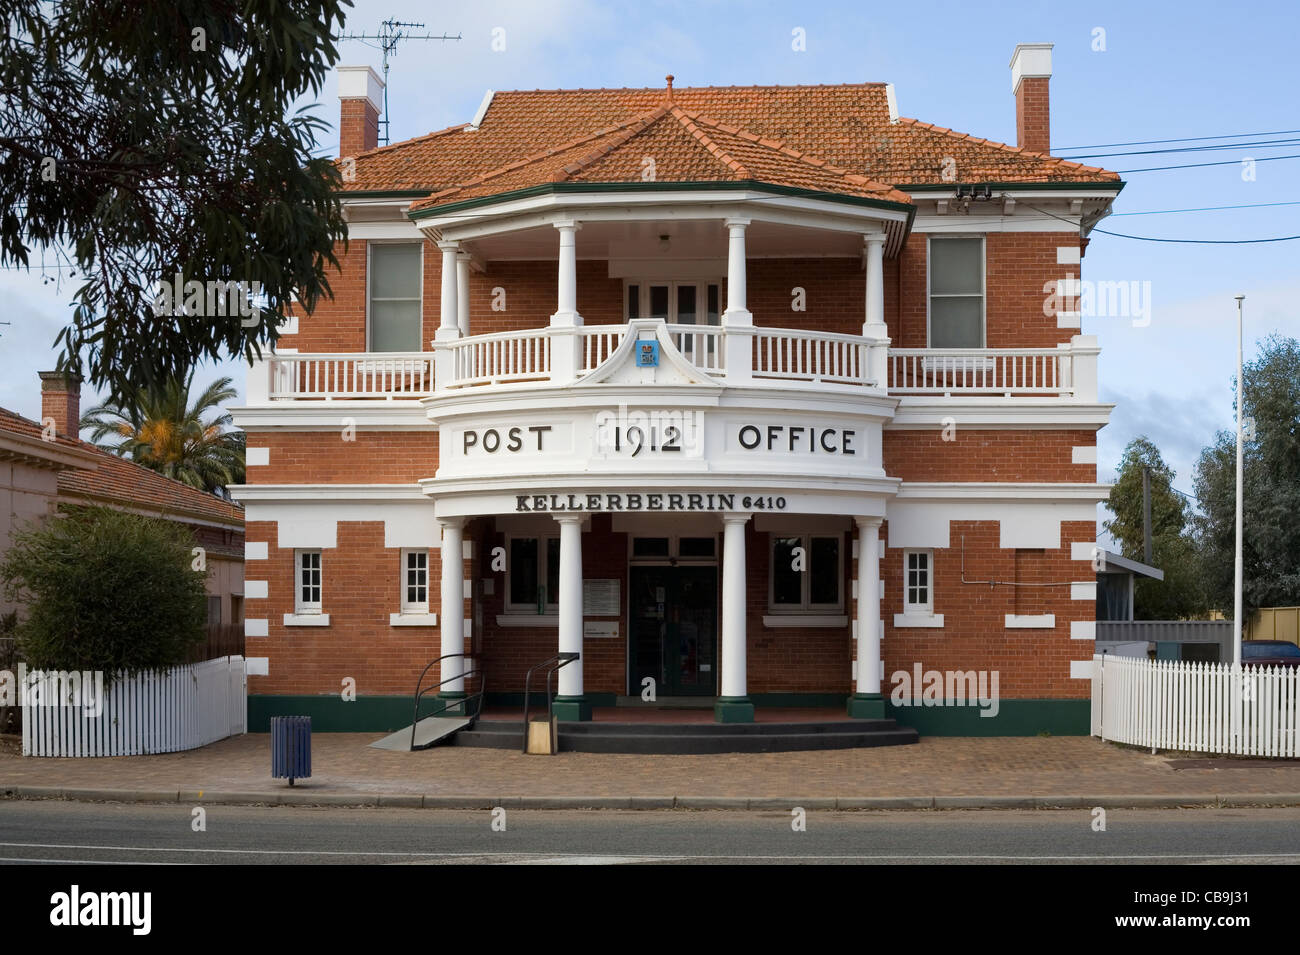 Kellerberrin post office in Western Australia Stock Photo